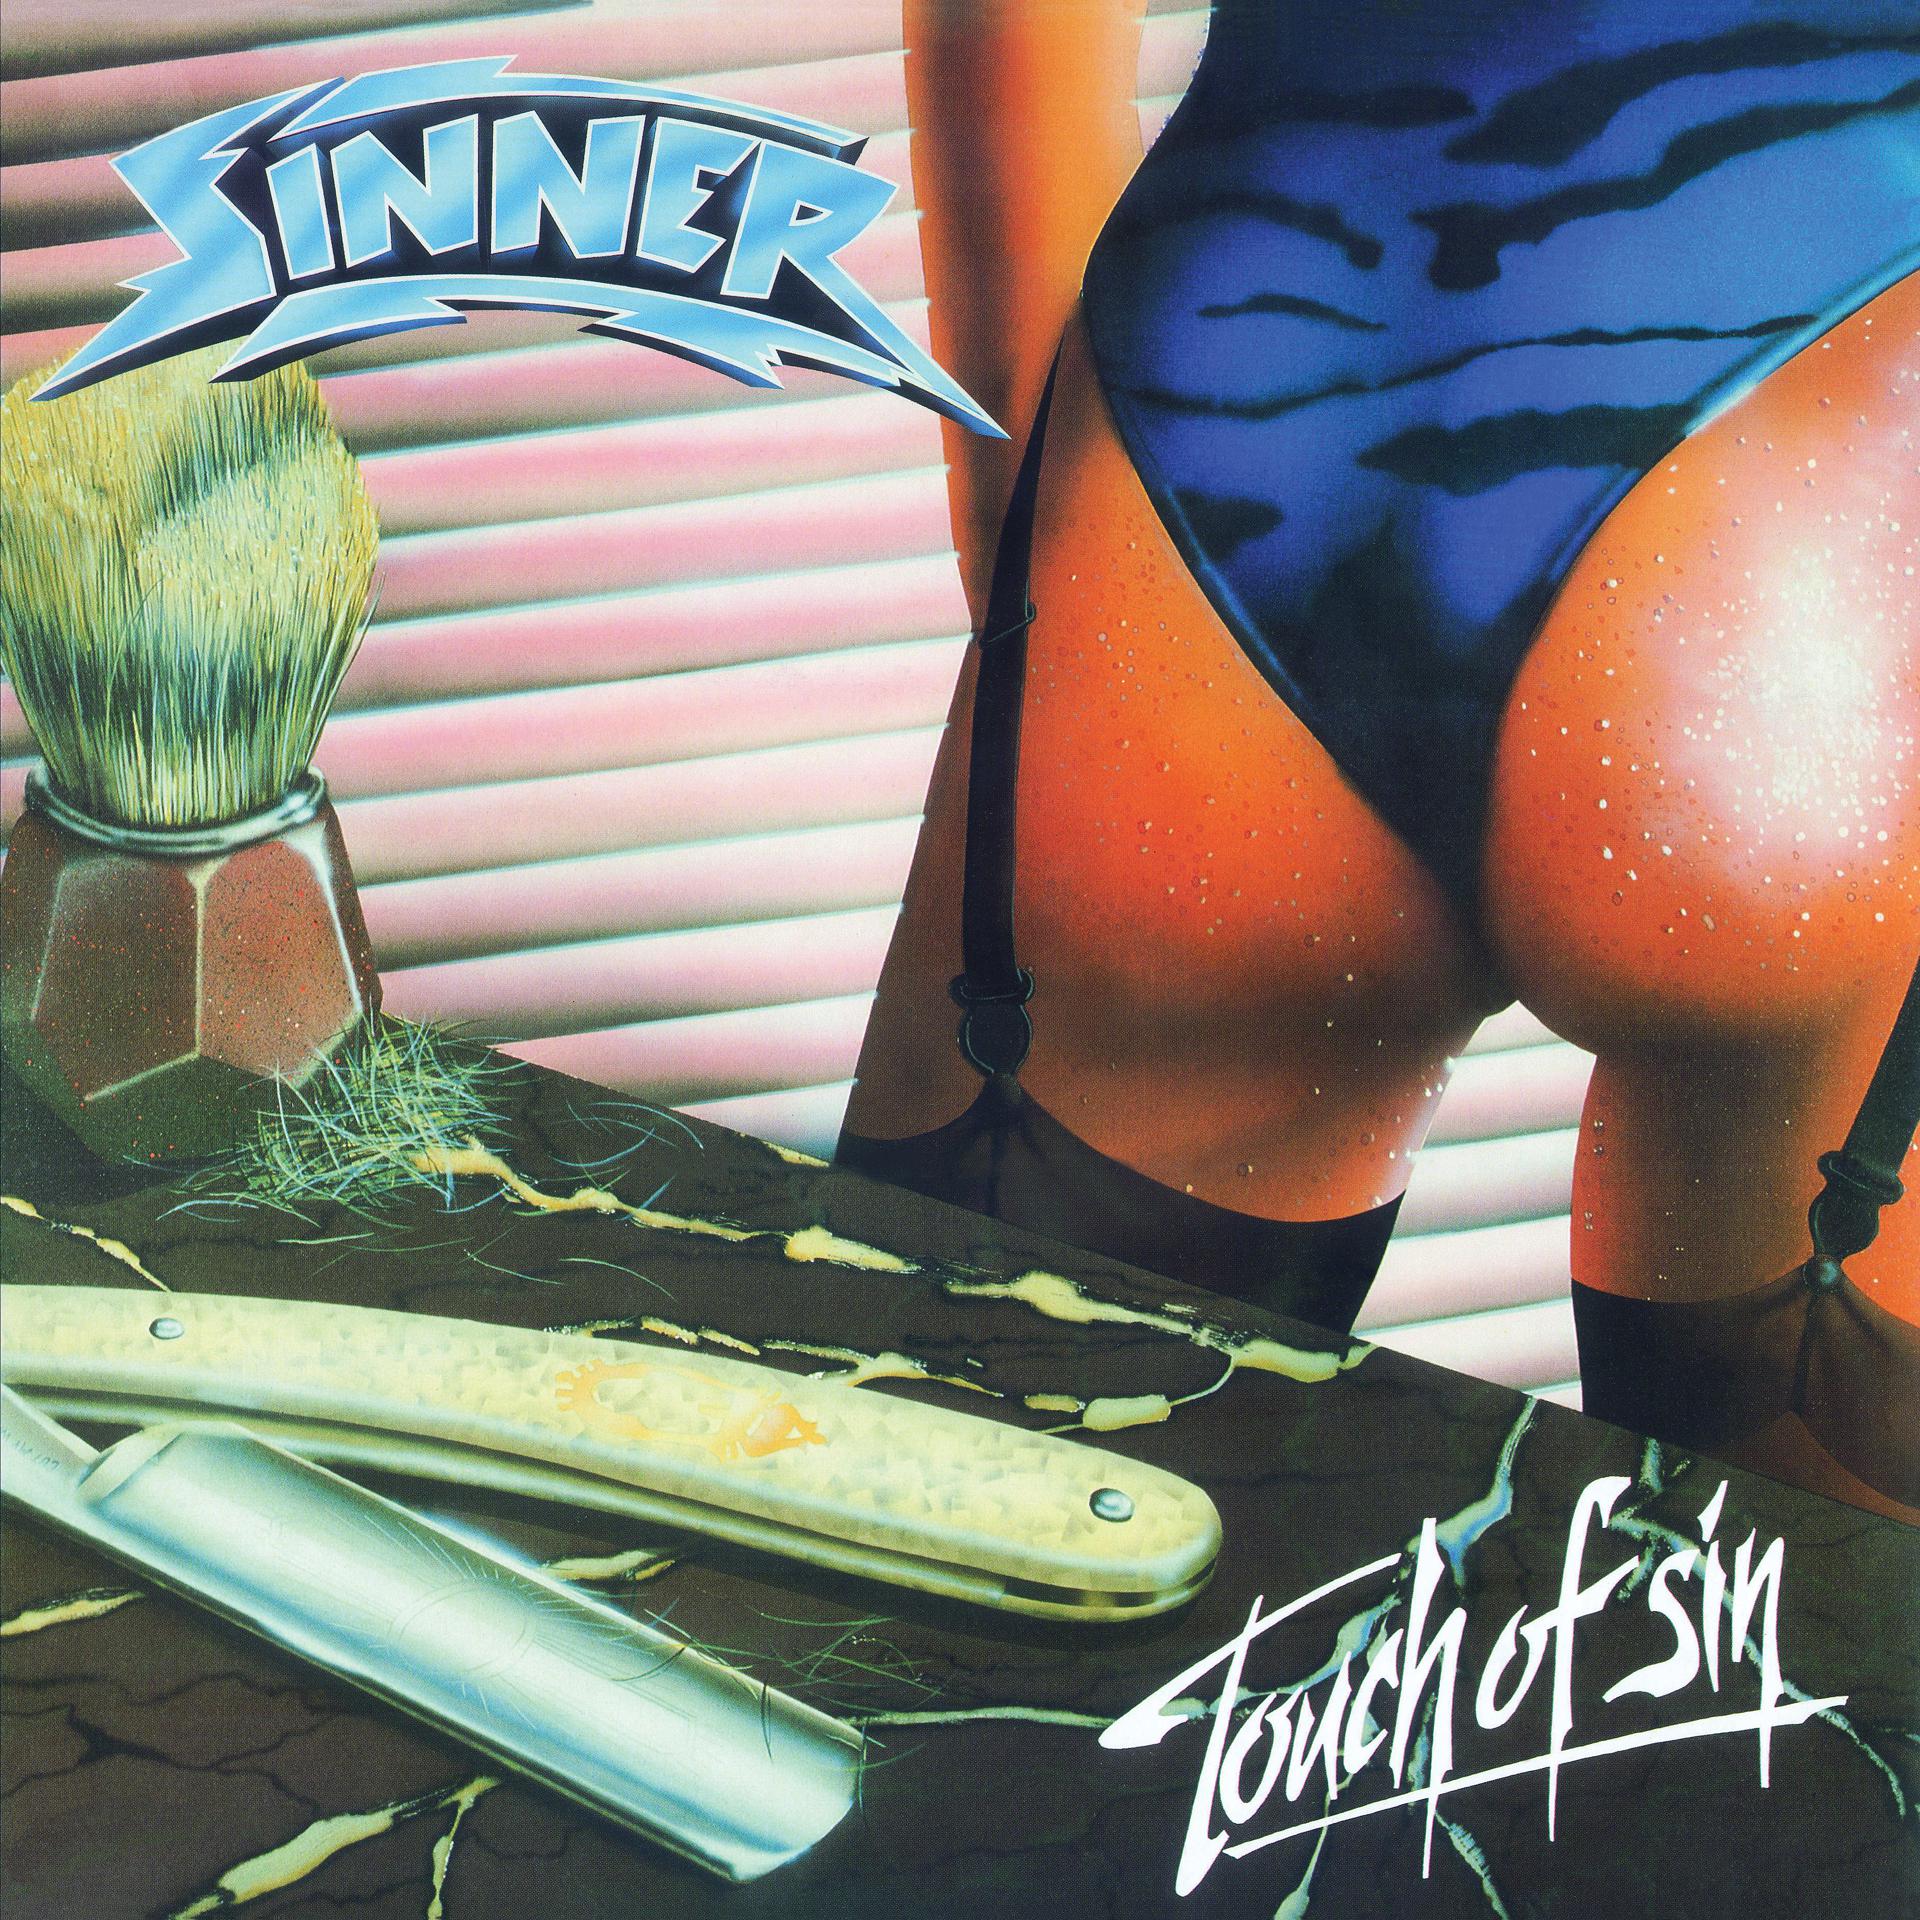 Постер к треку Sinner - Emerald